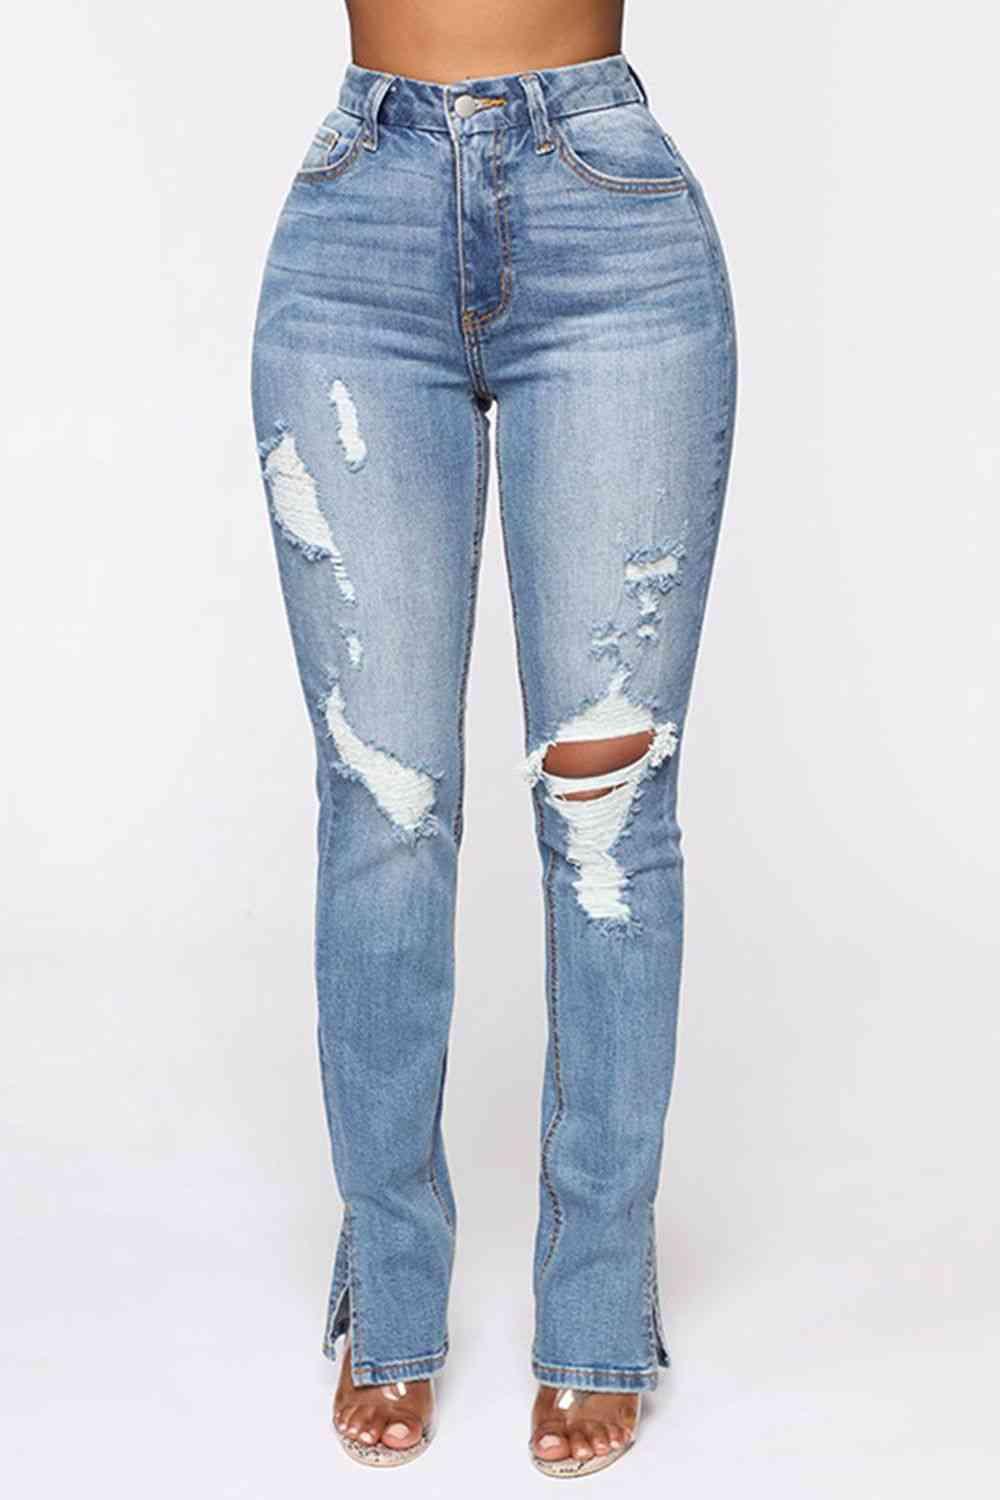 Distressed Slit Jeans - Immenzive